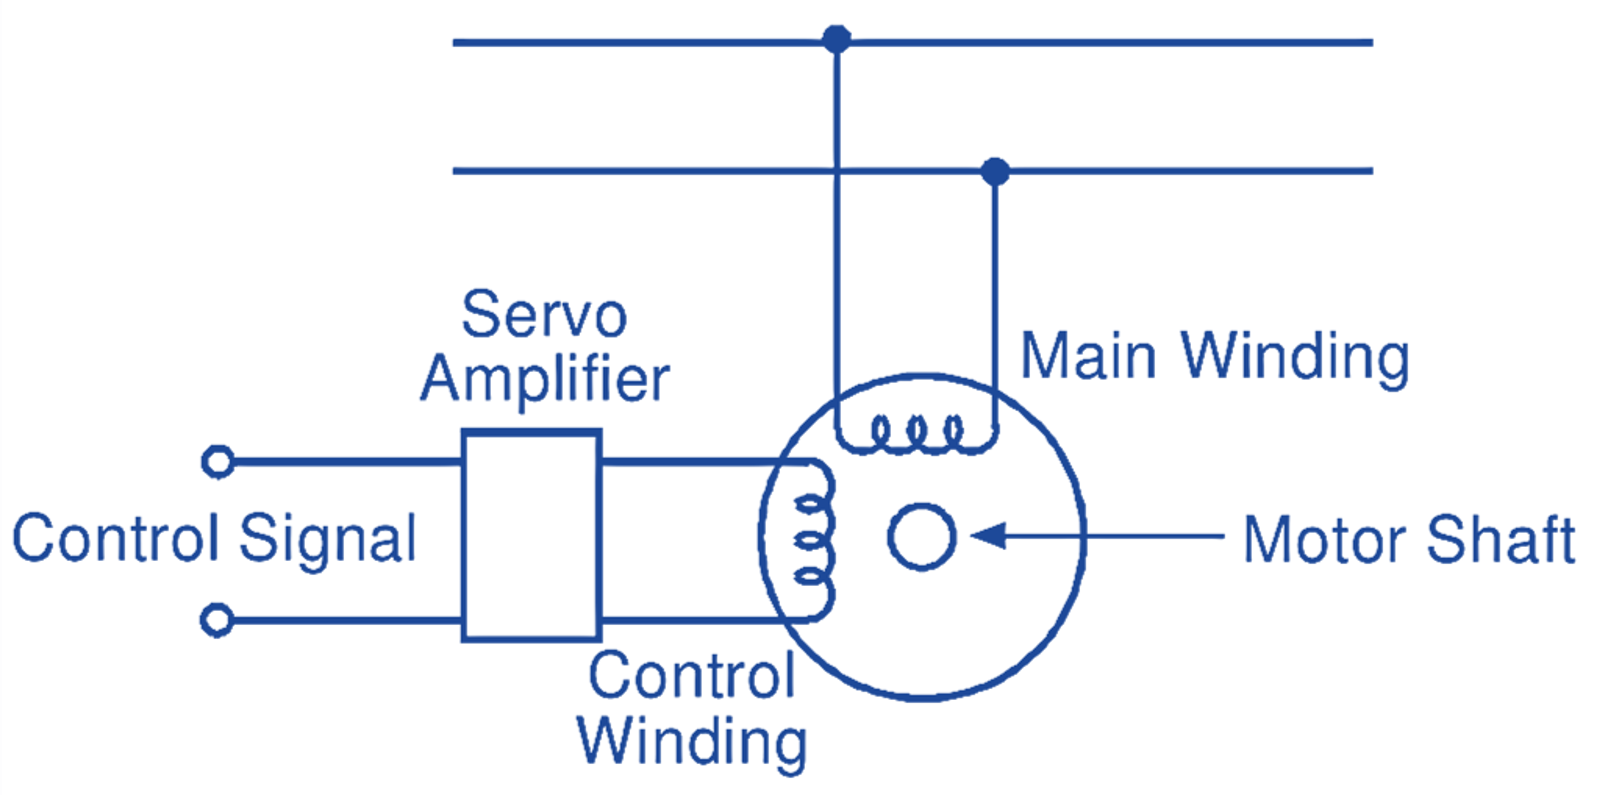 AC Servo motor - Working Principle, Circuit Diagram, Construction,  Characteristics & Applications - ElectricalWorkbook